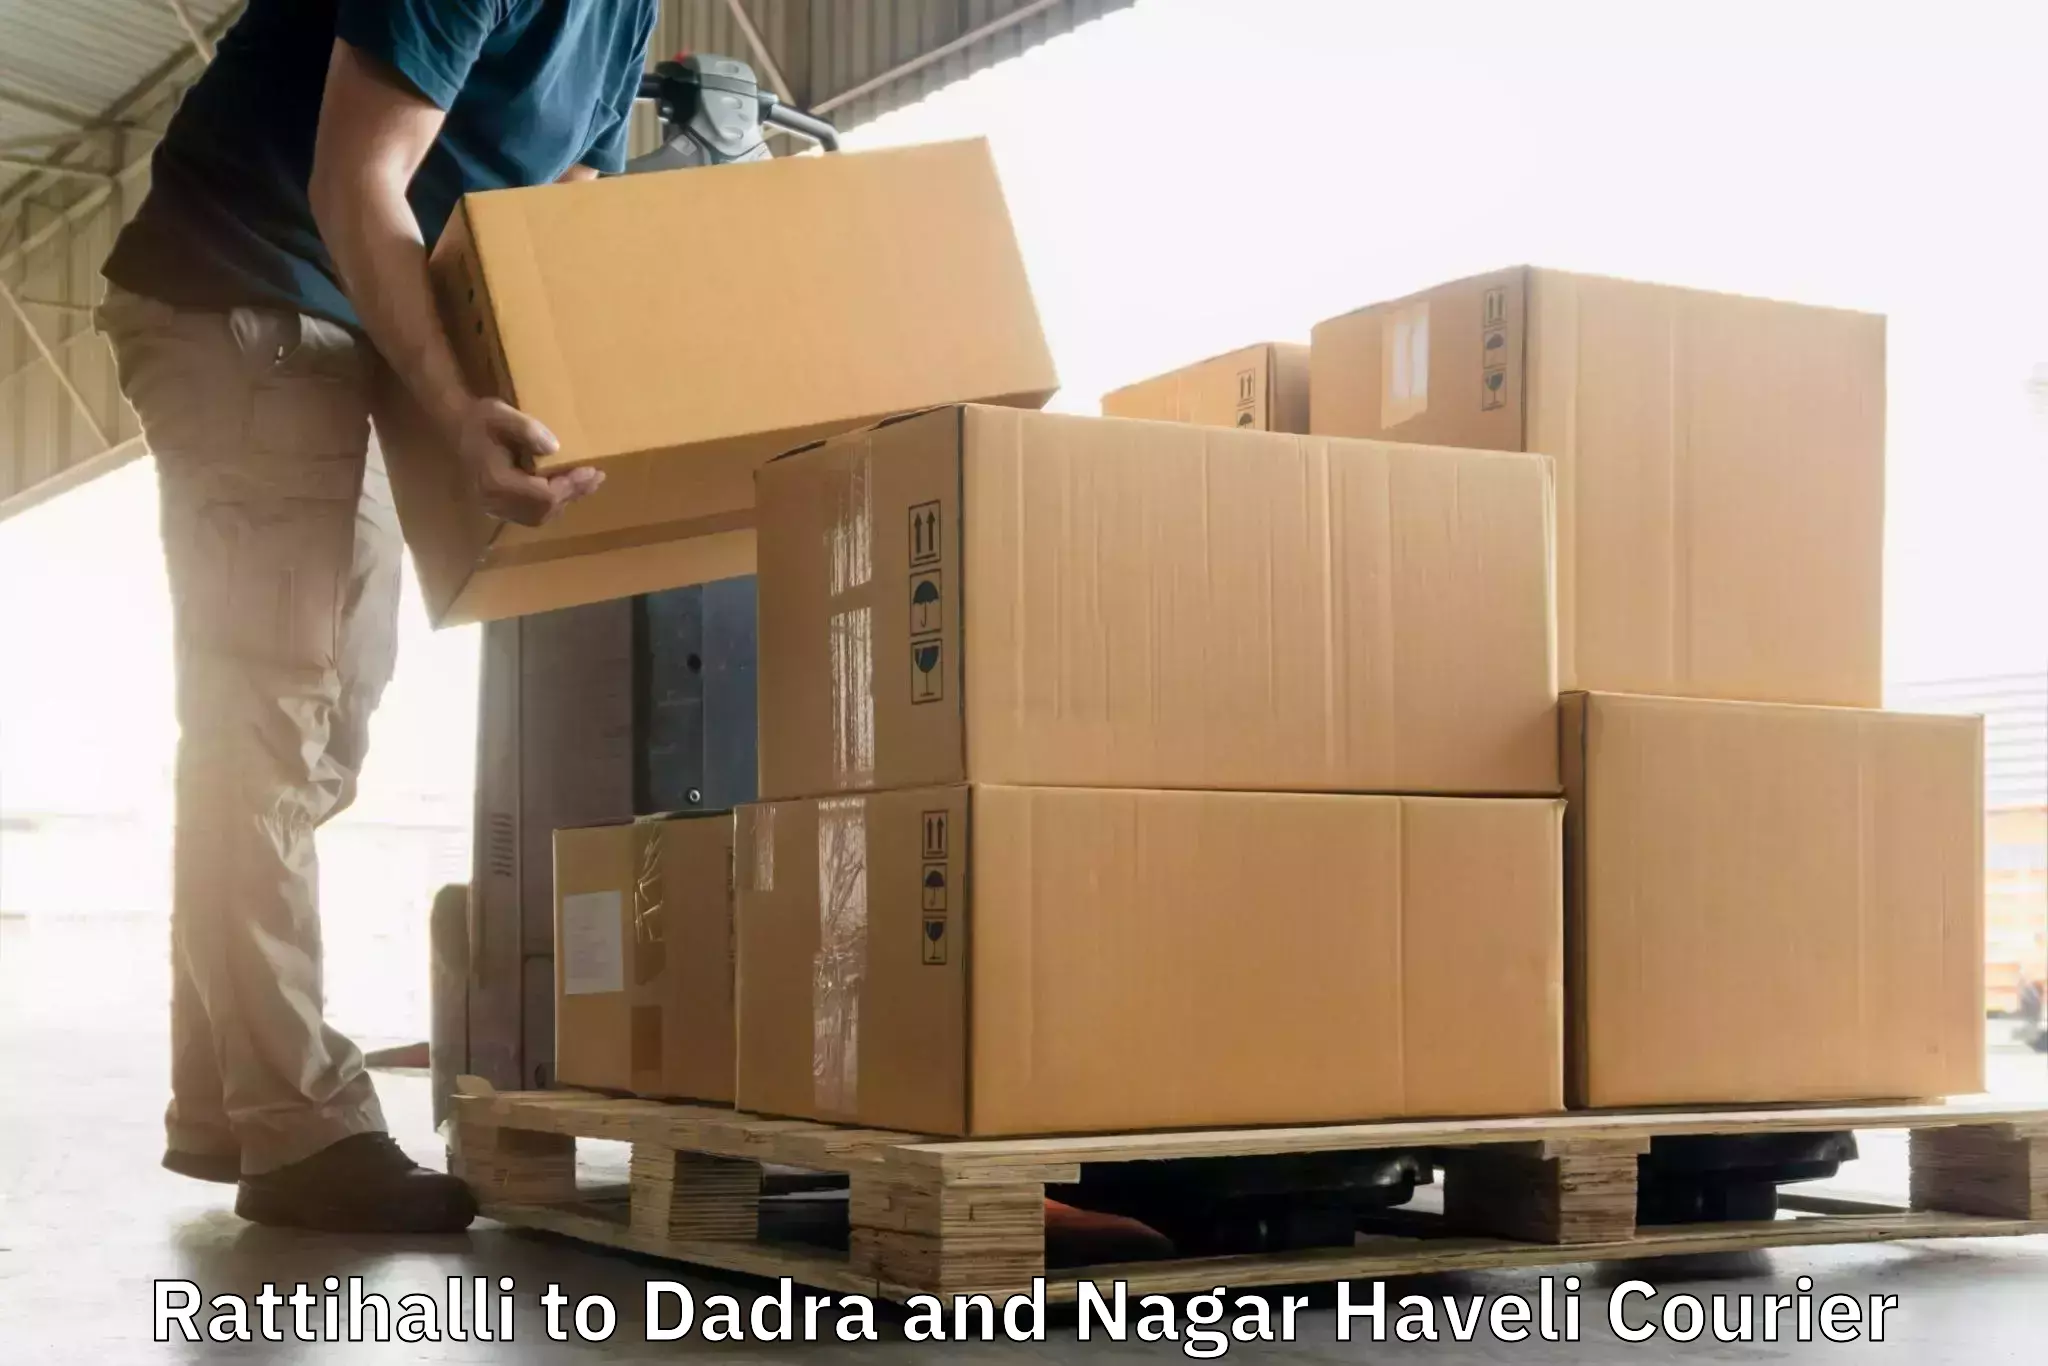 Door-to-door freight service Rattihalli to Dadra and Nagar Haveli